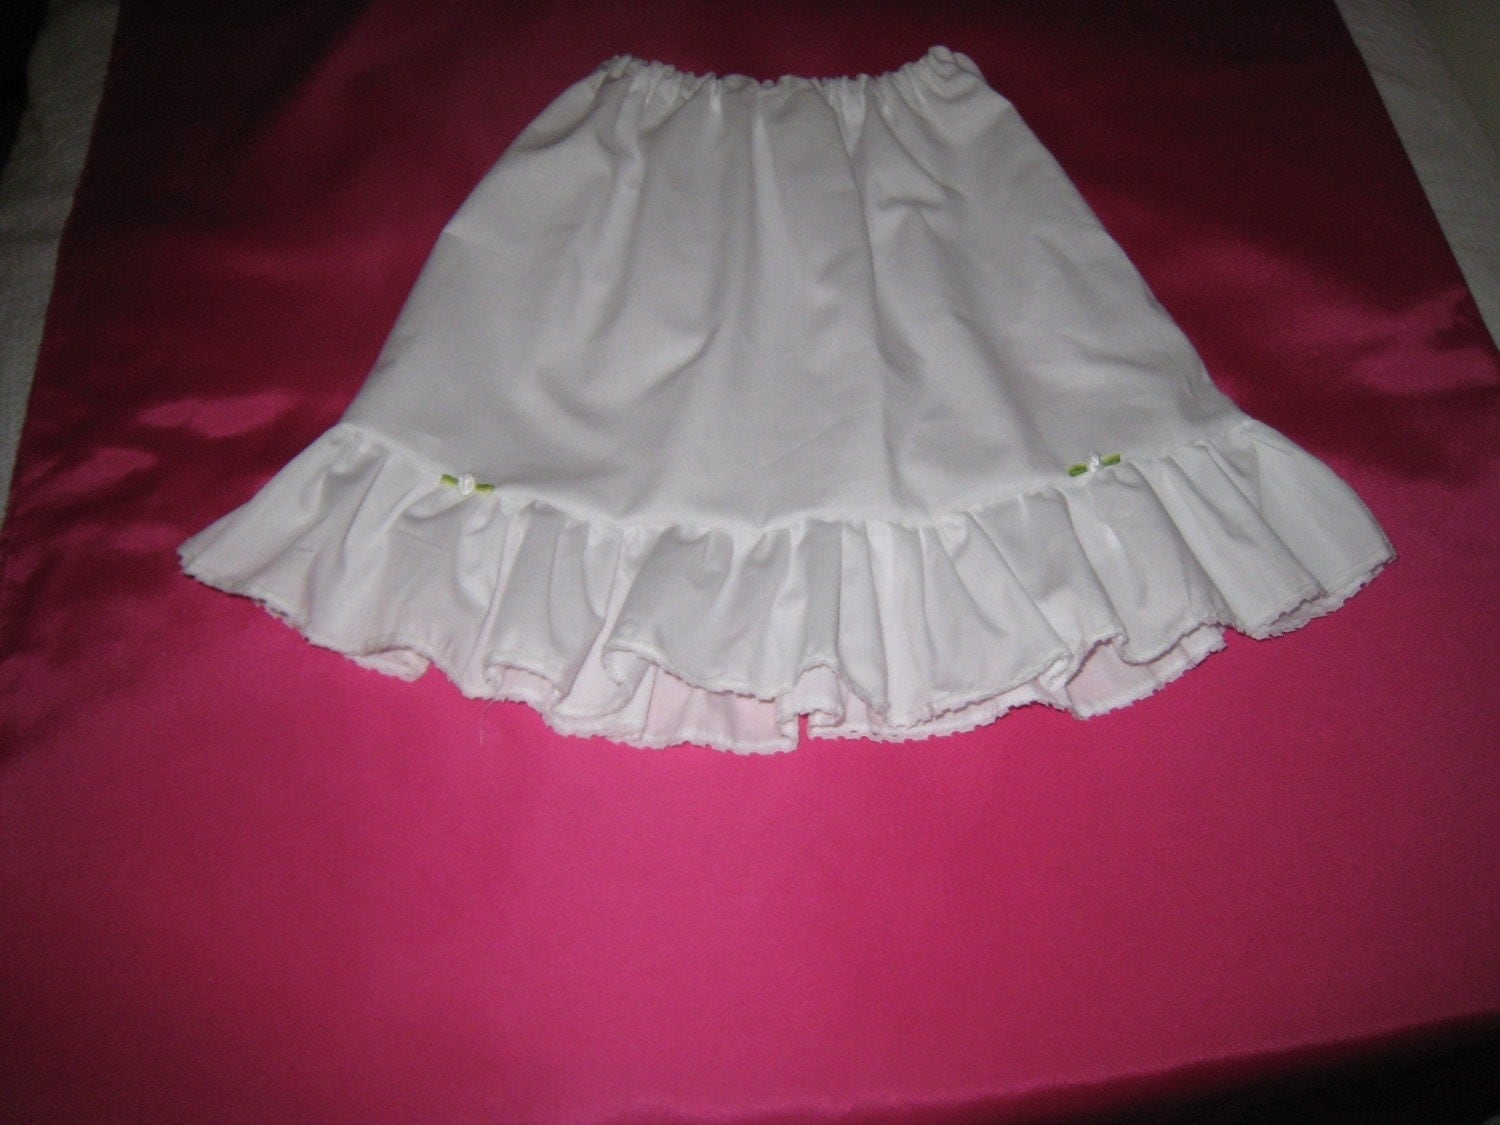 Little Girl's petticoat